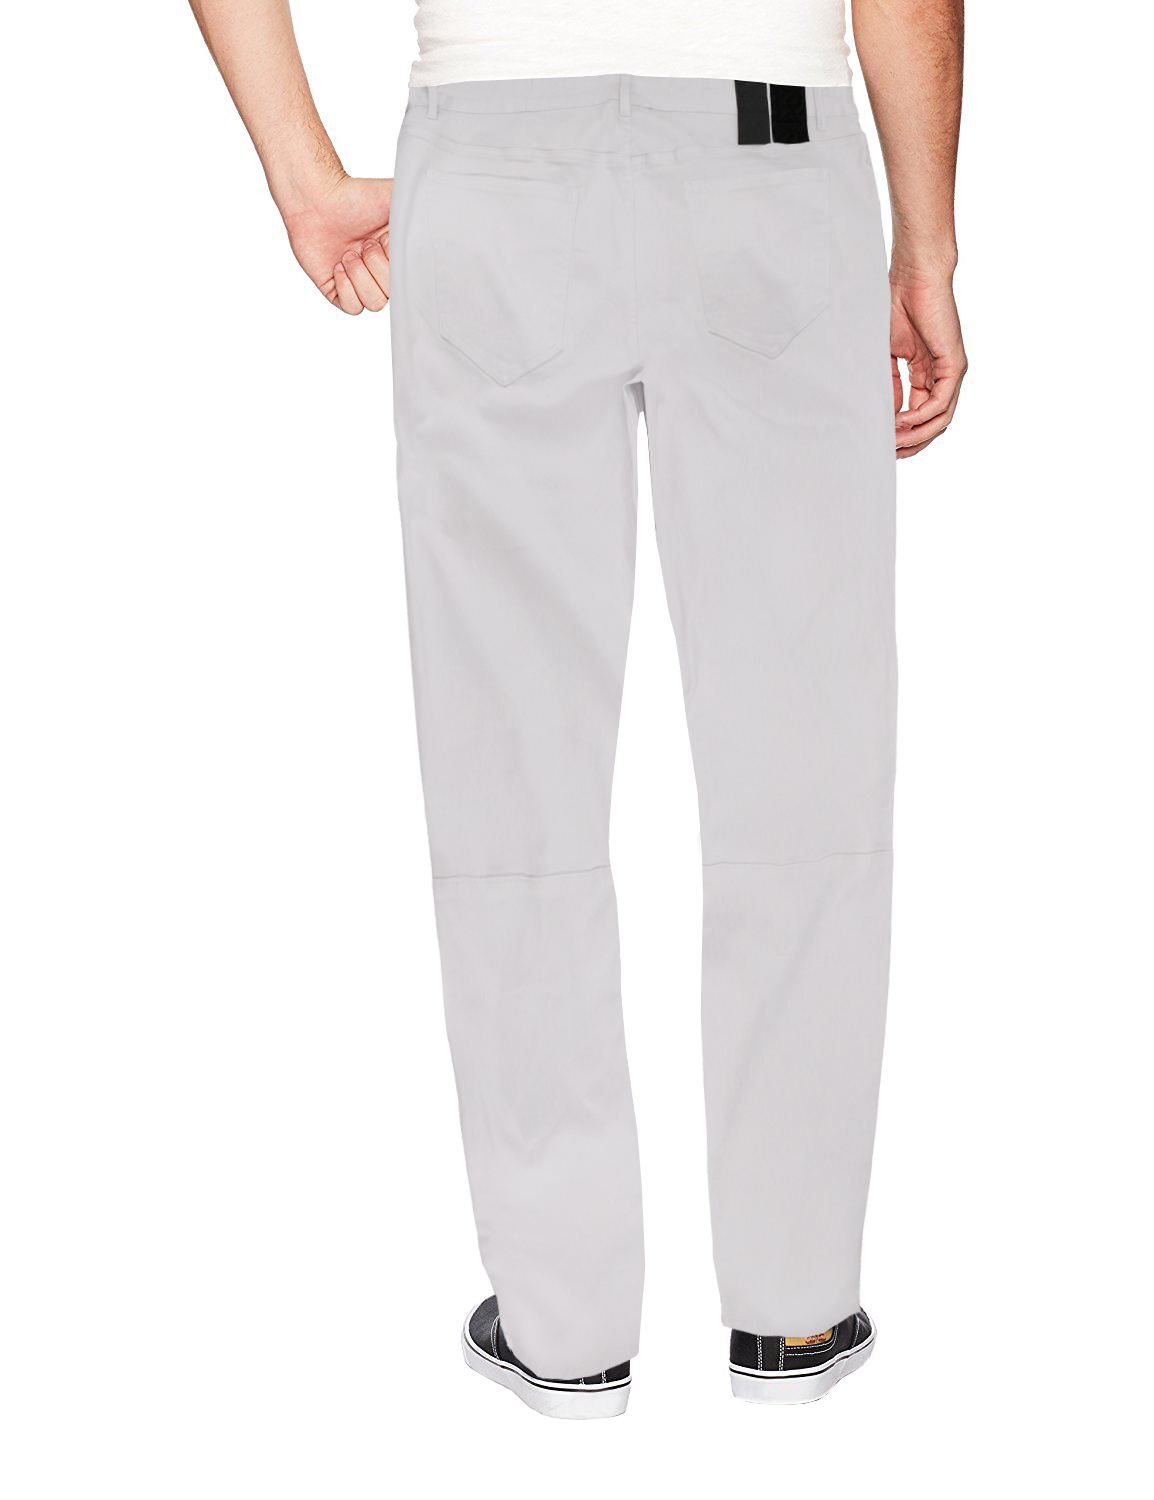 LR Scoop Men's Casual Stretch Denim Pants Moto Quilt Zipper Fashion Solid Jeans (White, 50x32) - image 2 of 3